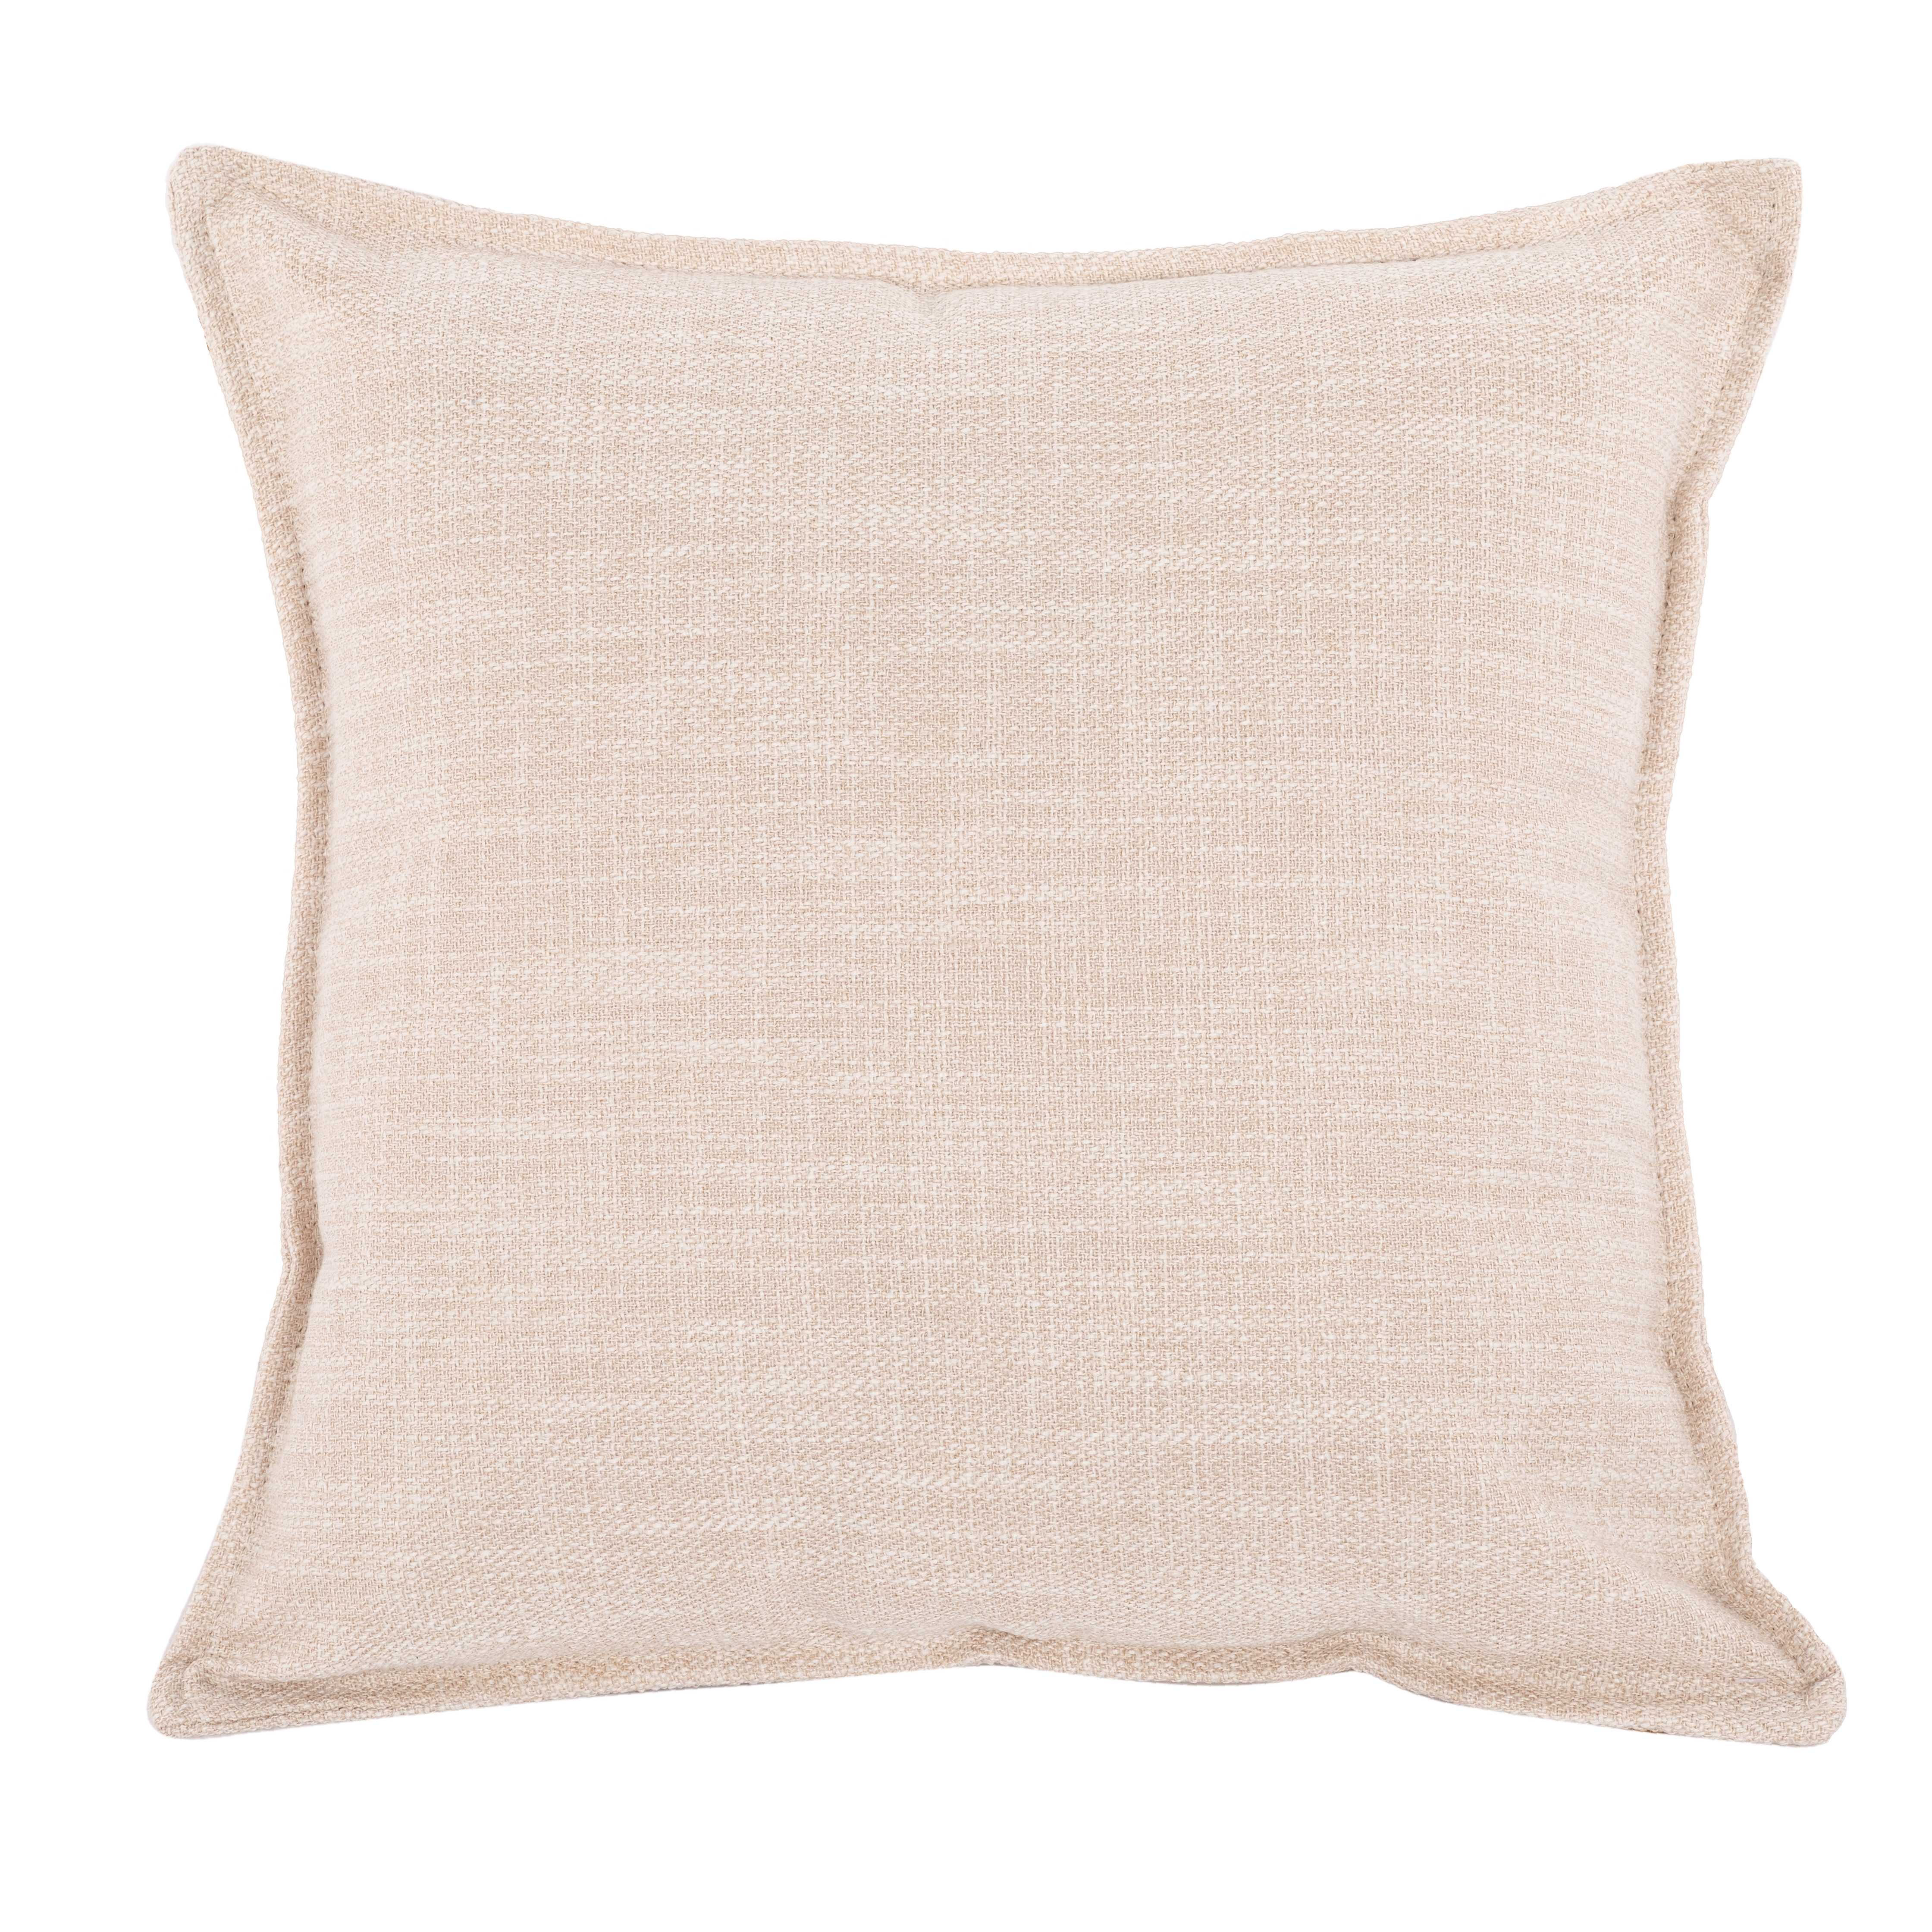 Cushion (filled) ASTORIA - 45X45CM - set/2, off white